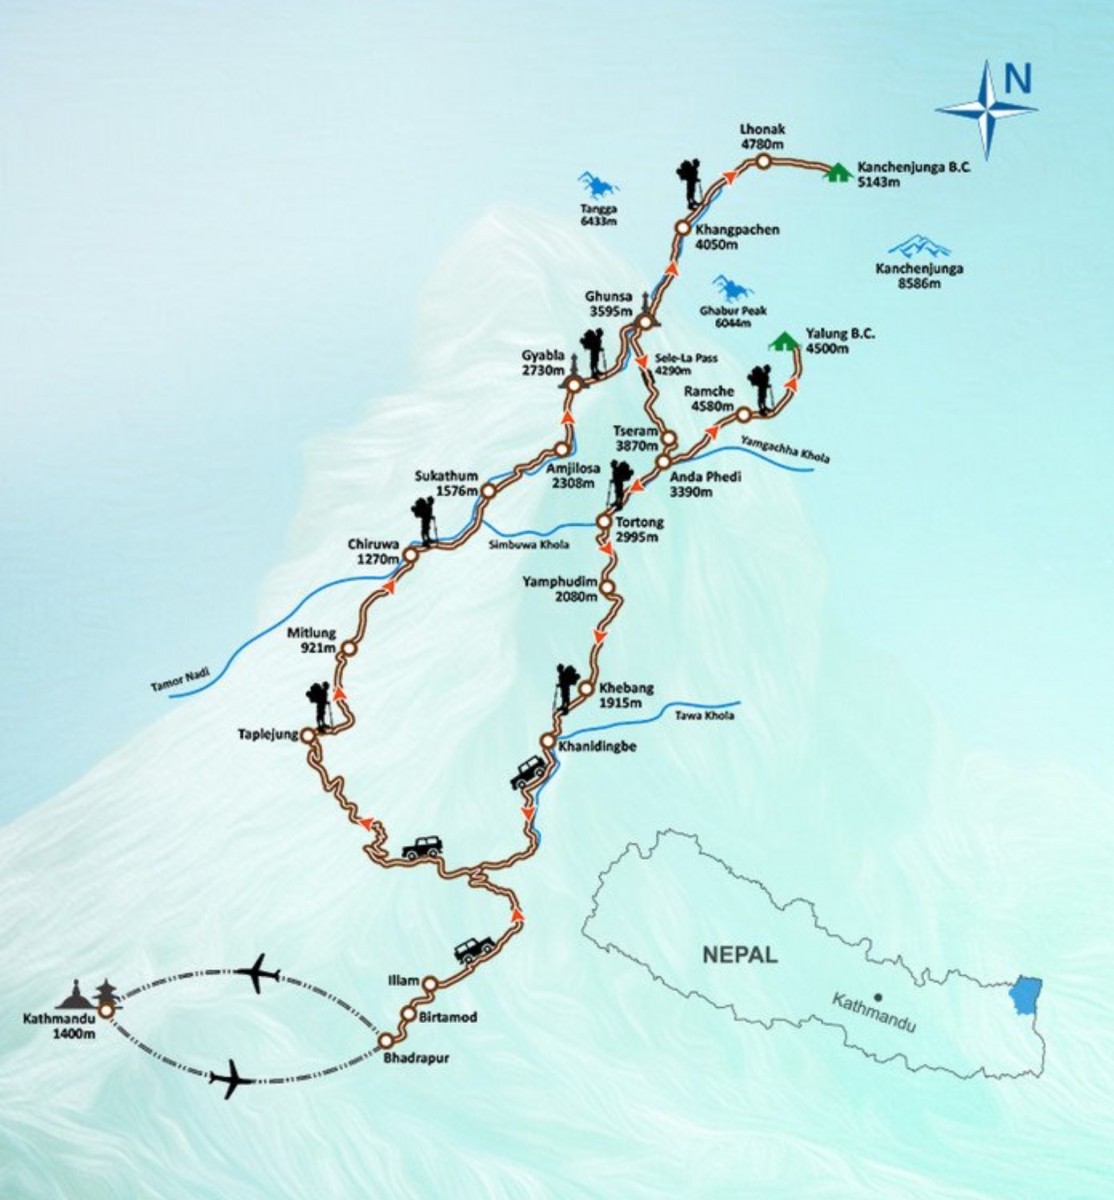 Kanchanjunga North Base Camp Trek Map